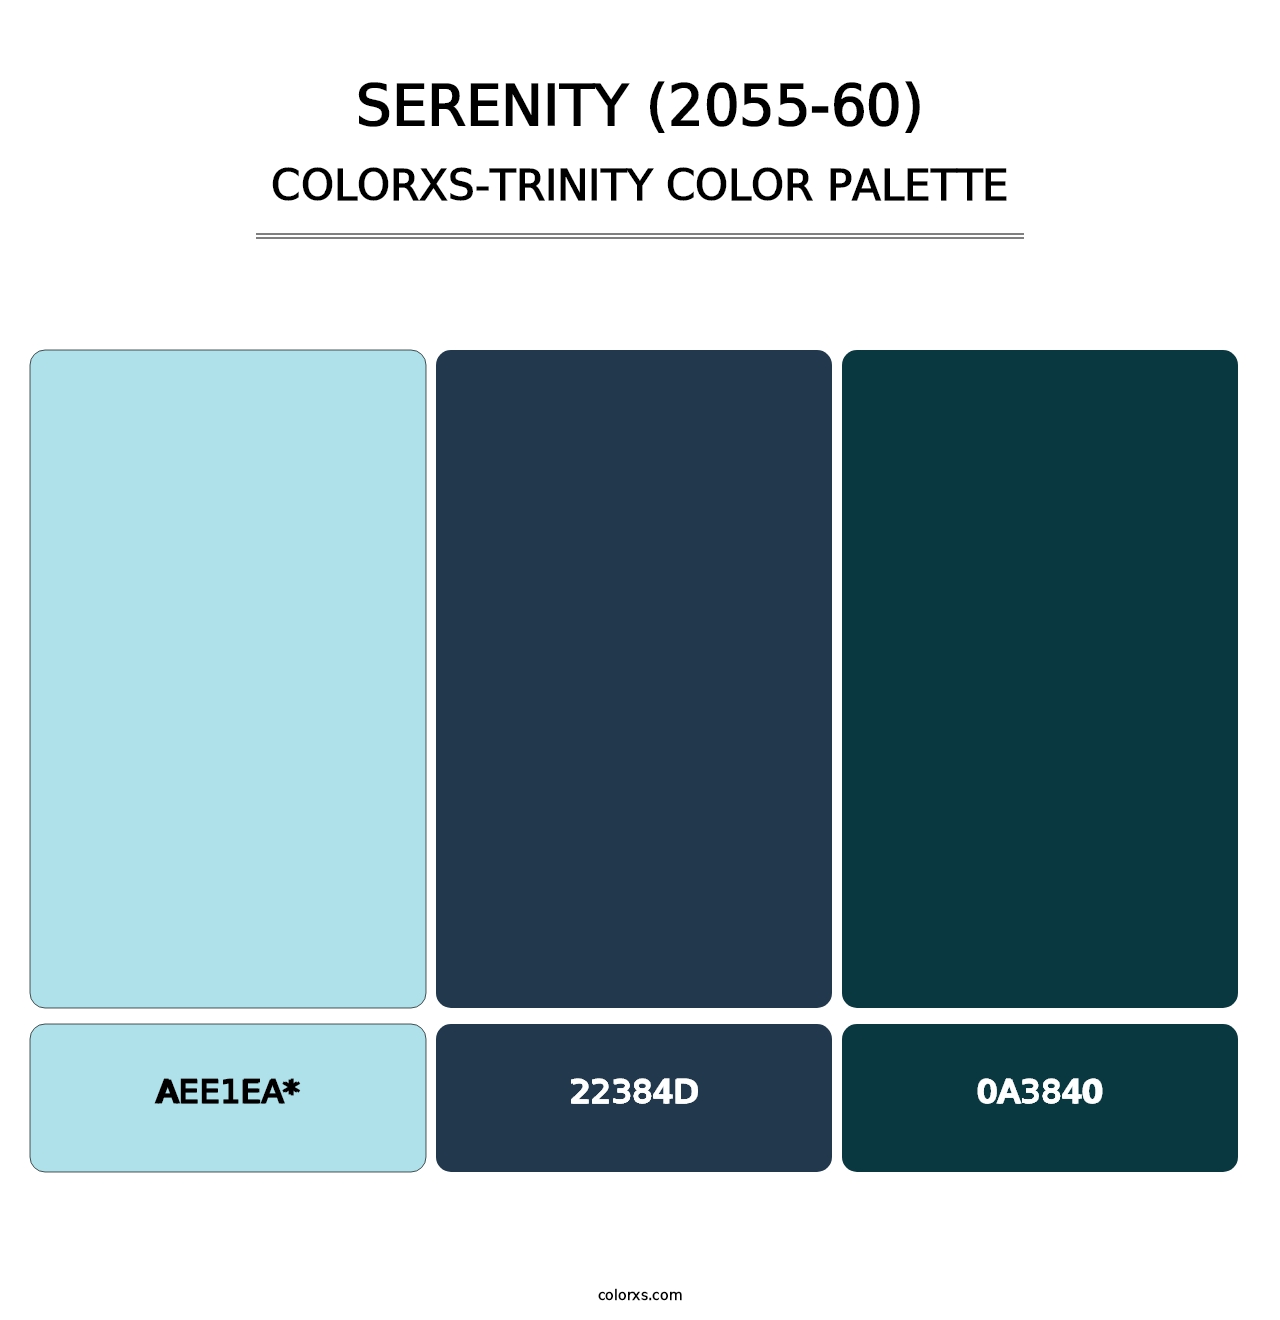 Serenity (2055-60) - Colorxs Trinity Palette